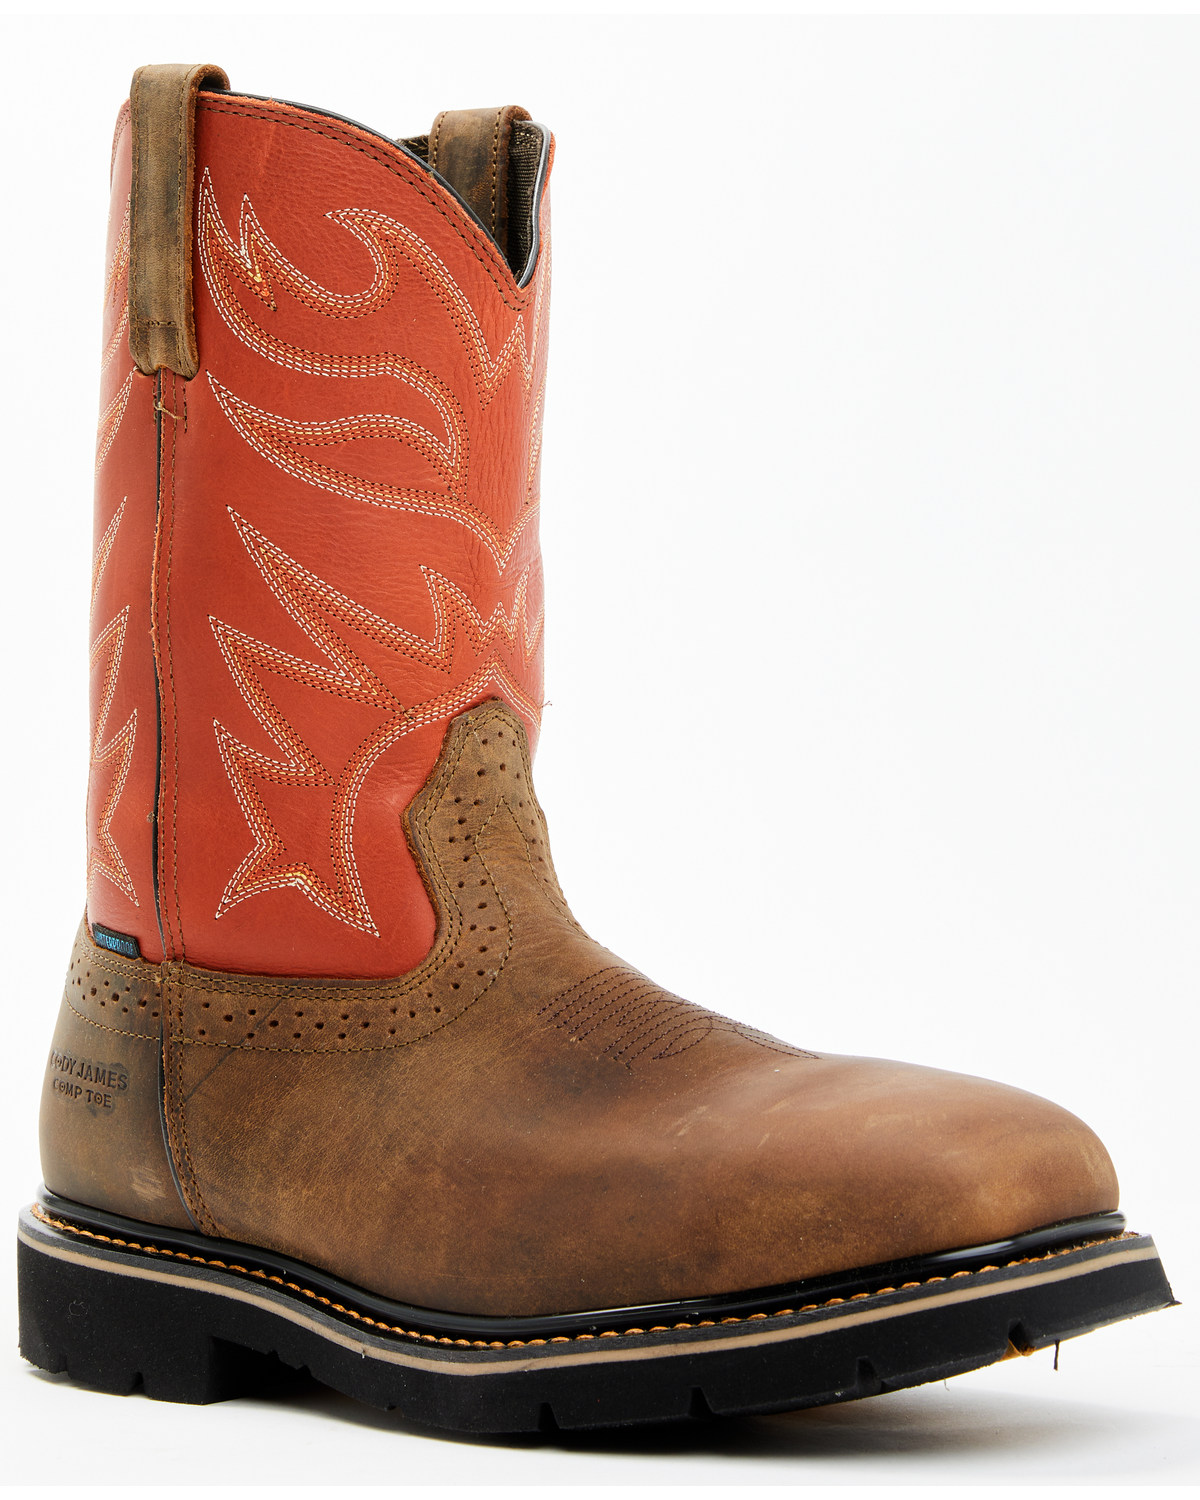 Cody James Men's Pull-On Waterproof Work Boots - Composite Toe